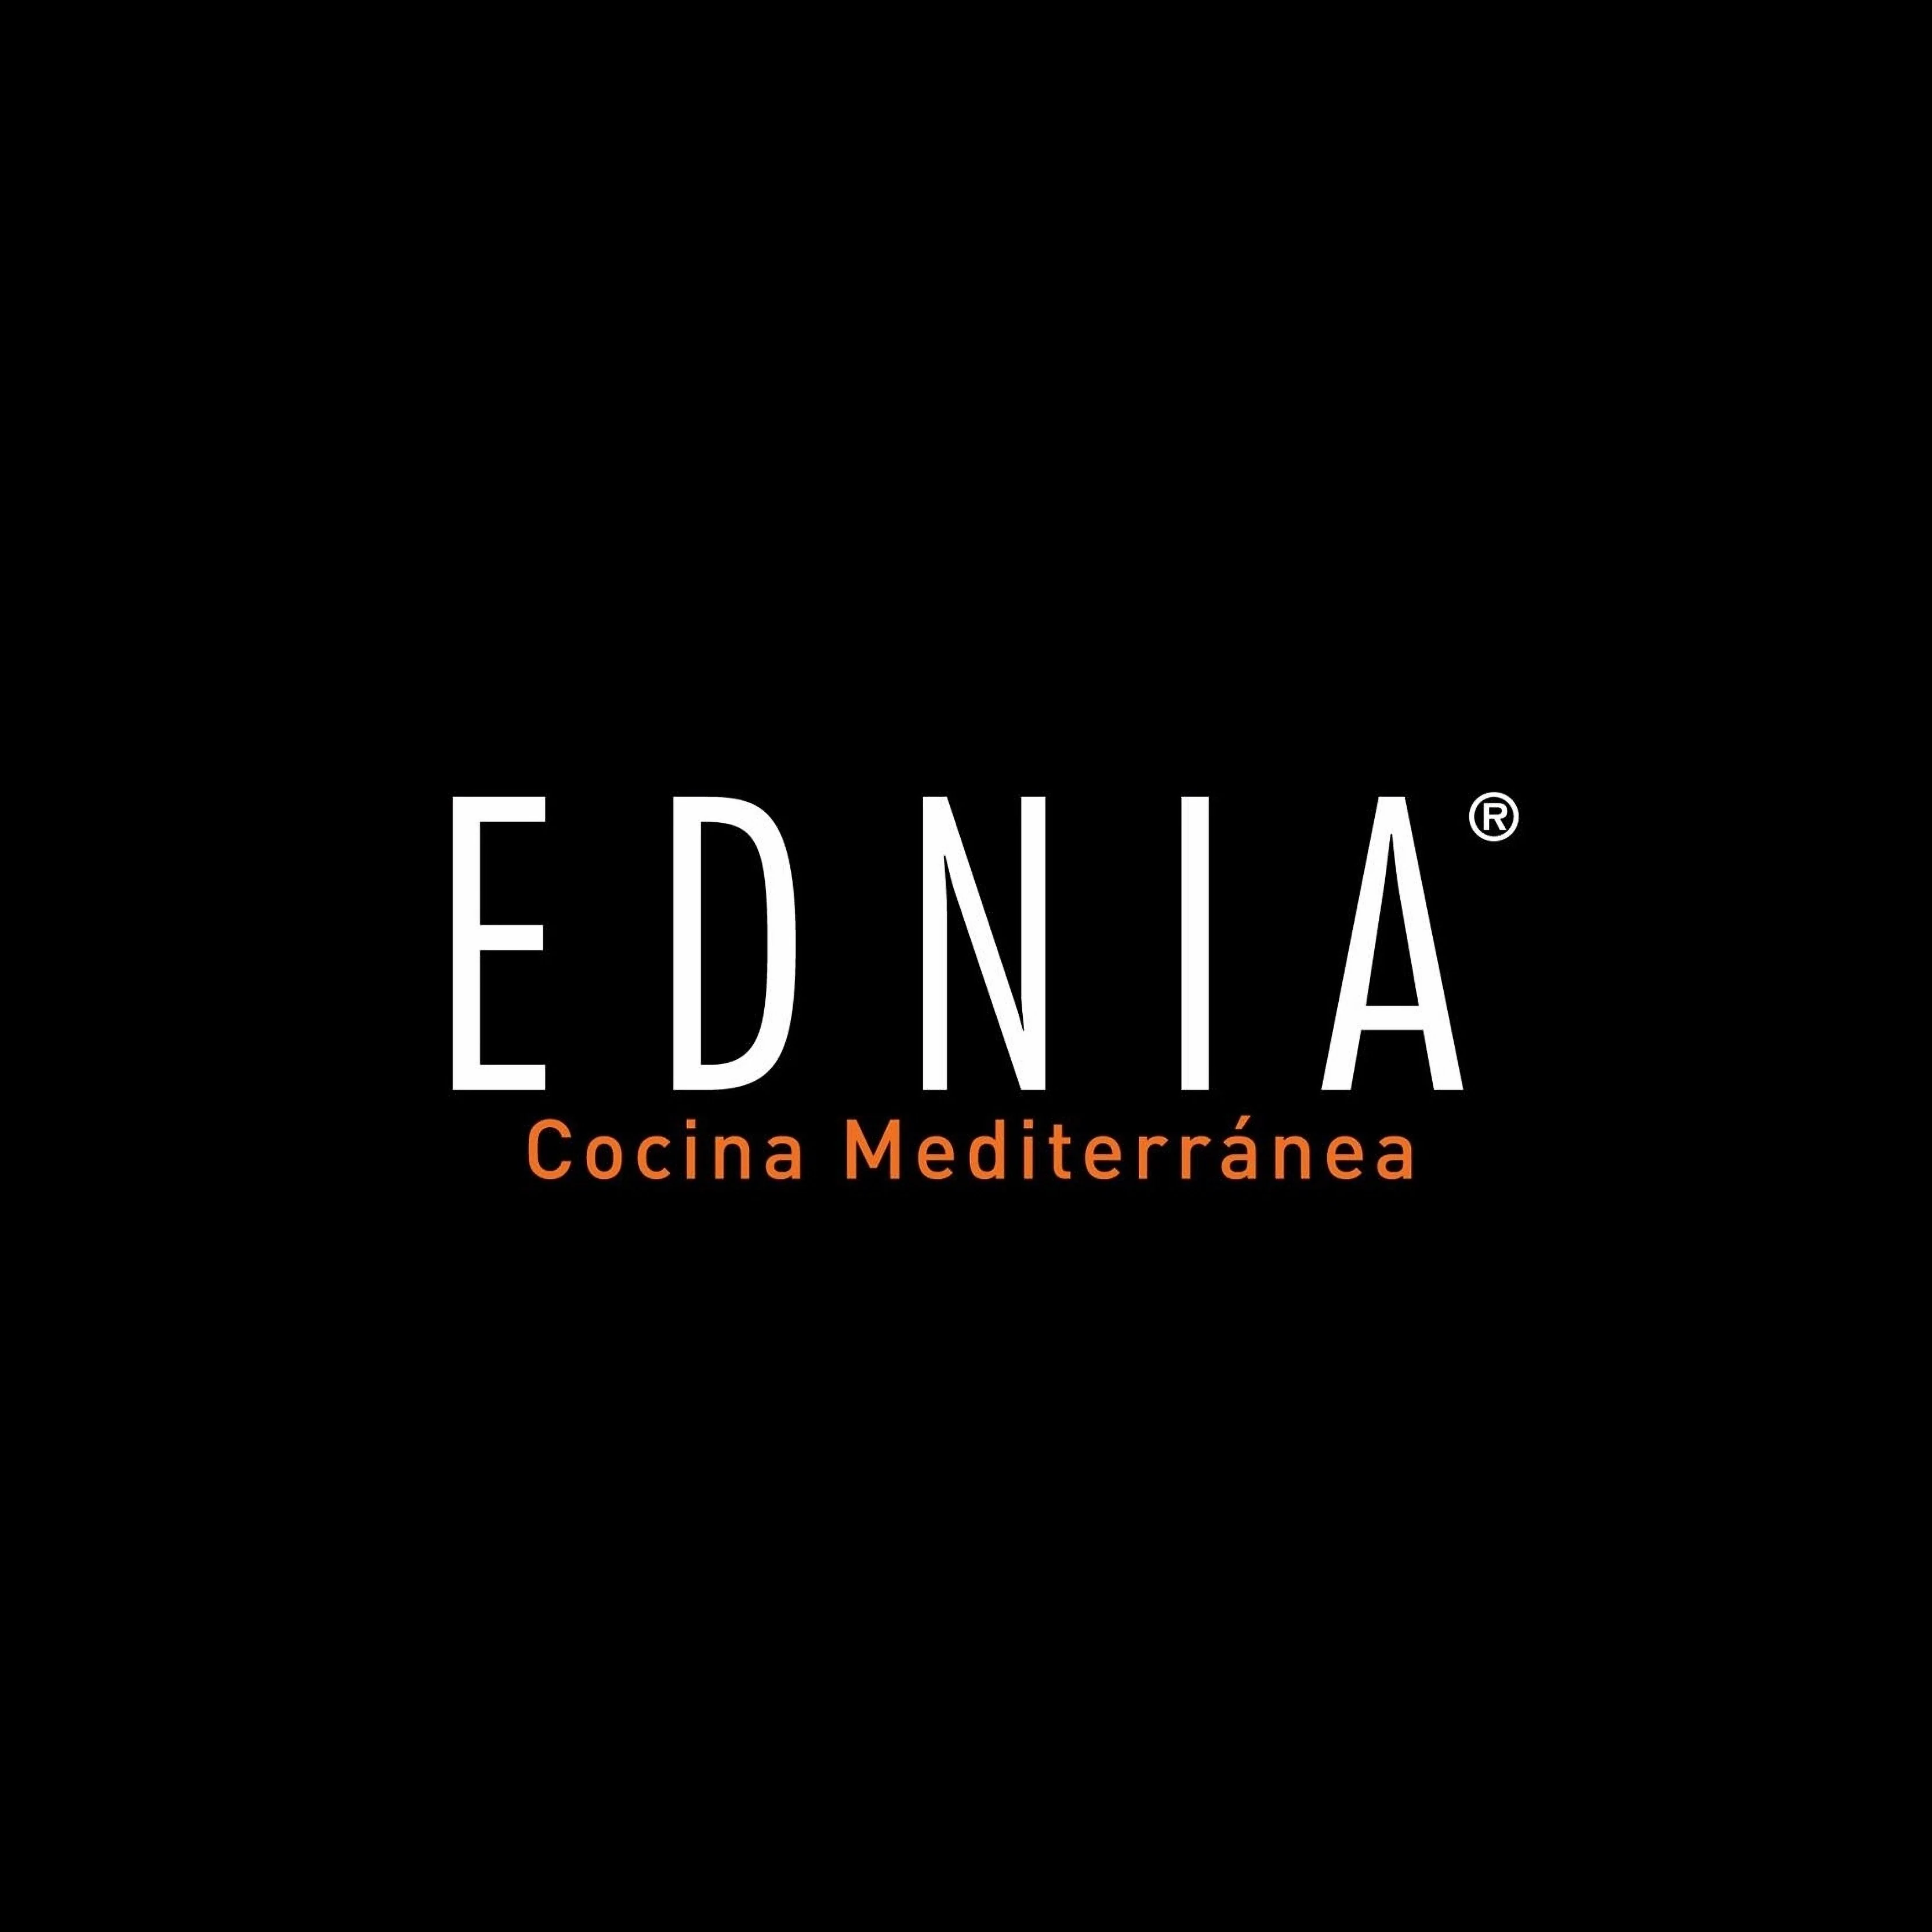 Restaurante-ednia-alta-gastronomia-21514